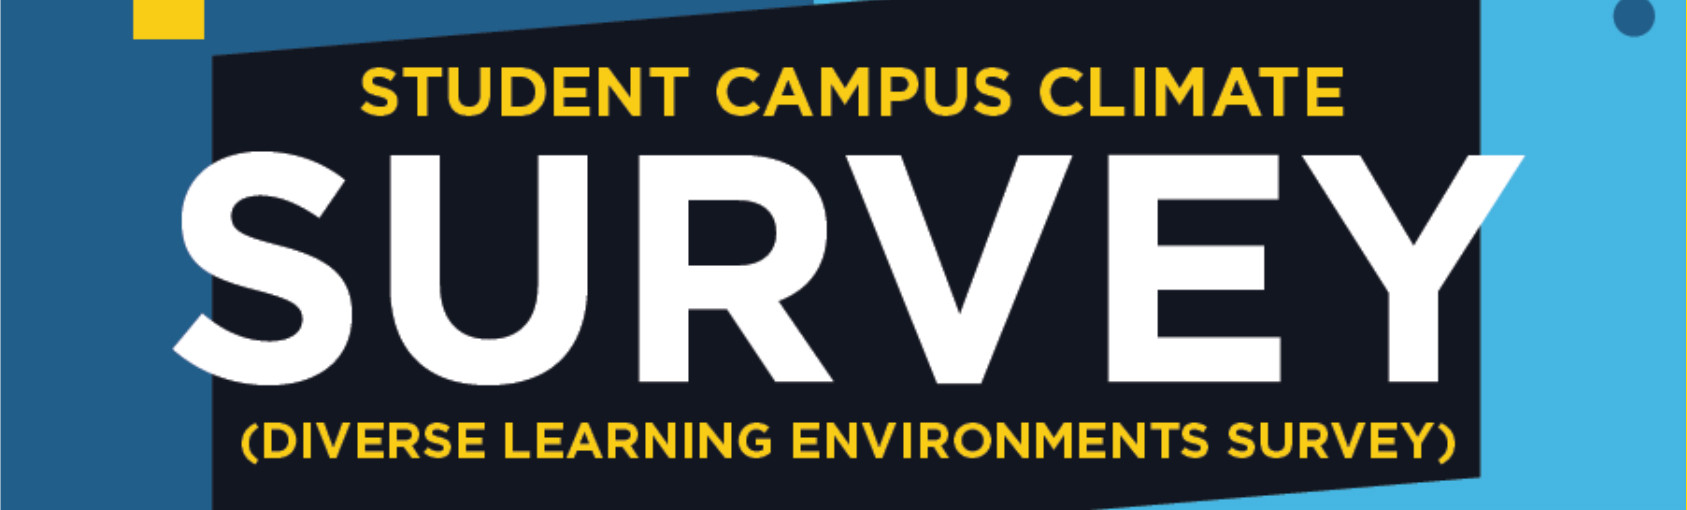 Make Your Voice Heard Through the Campus Climate Survey banner